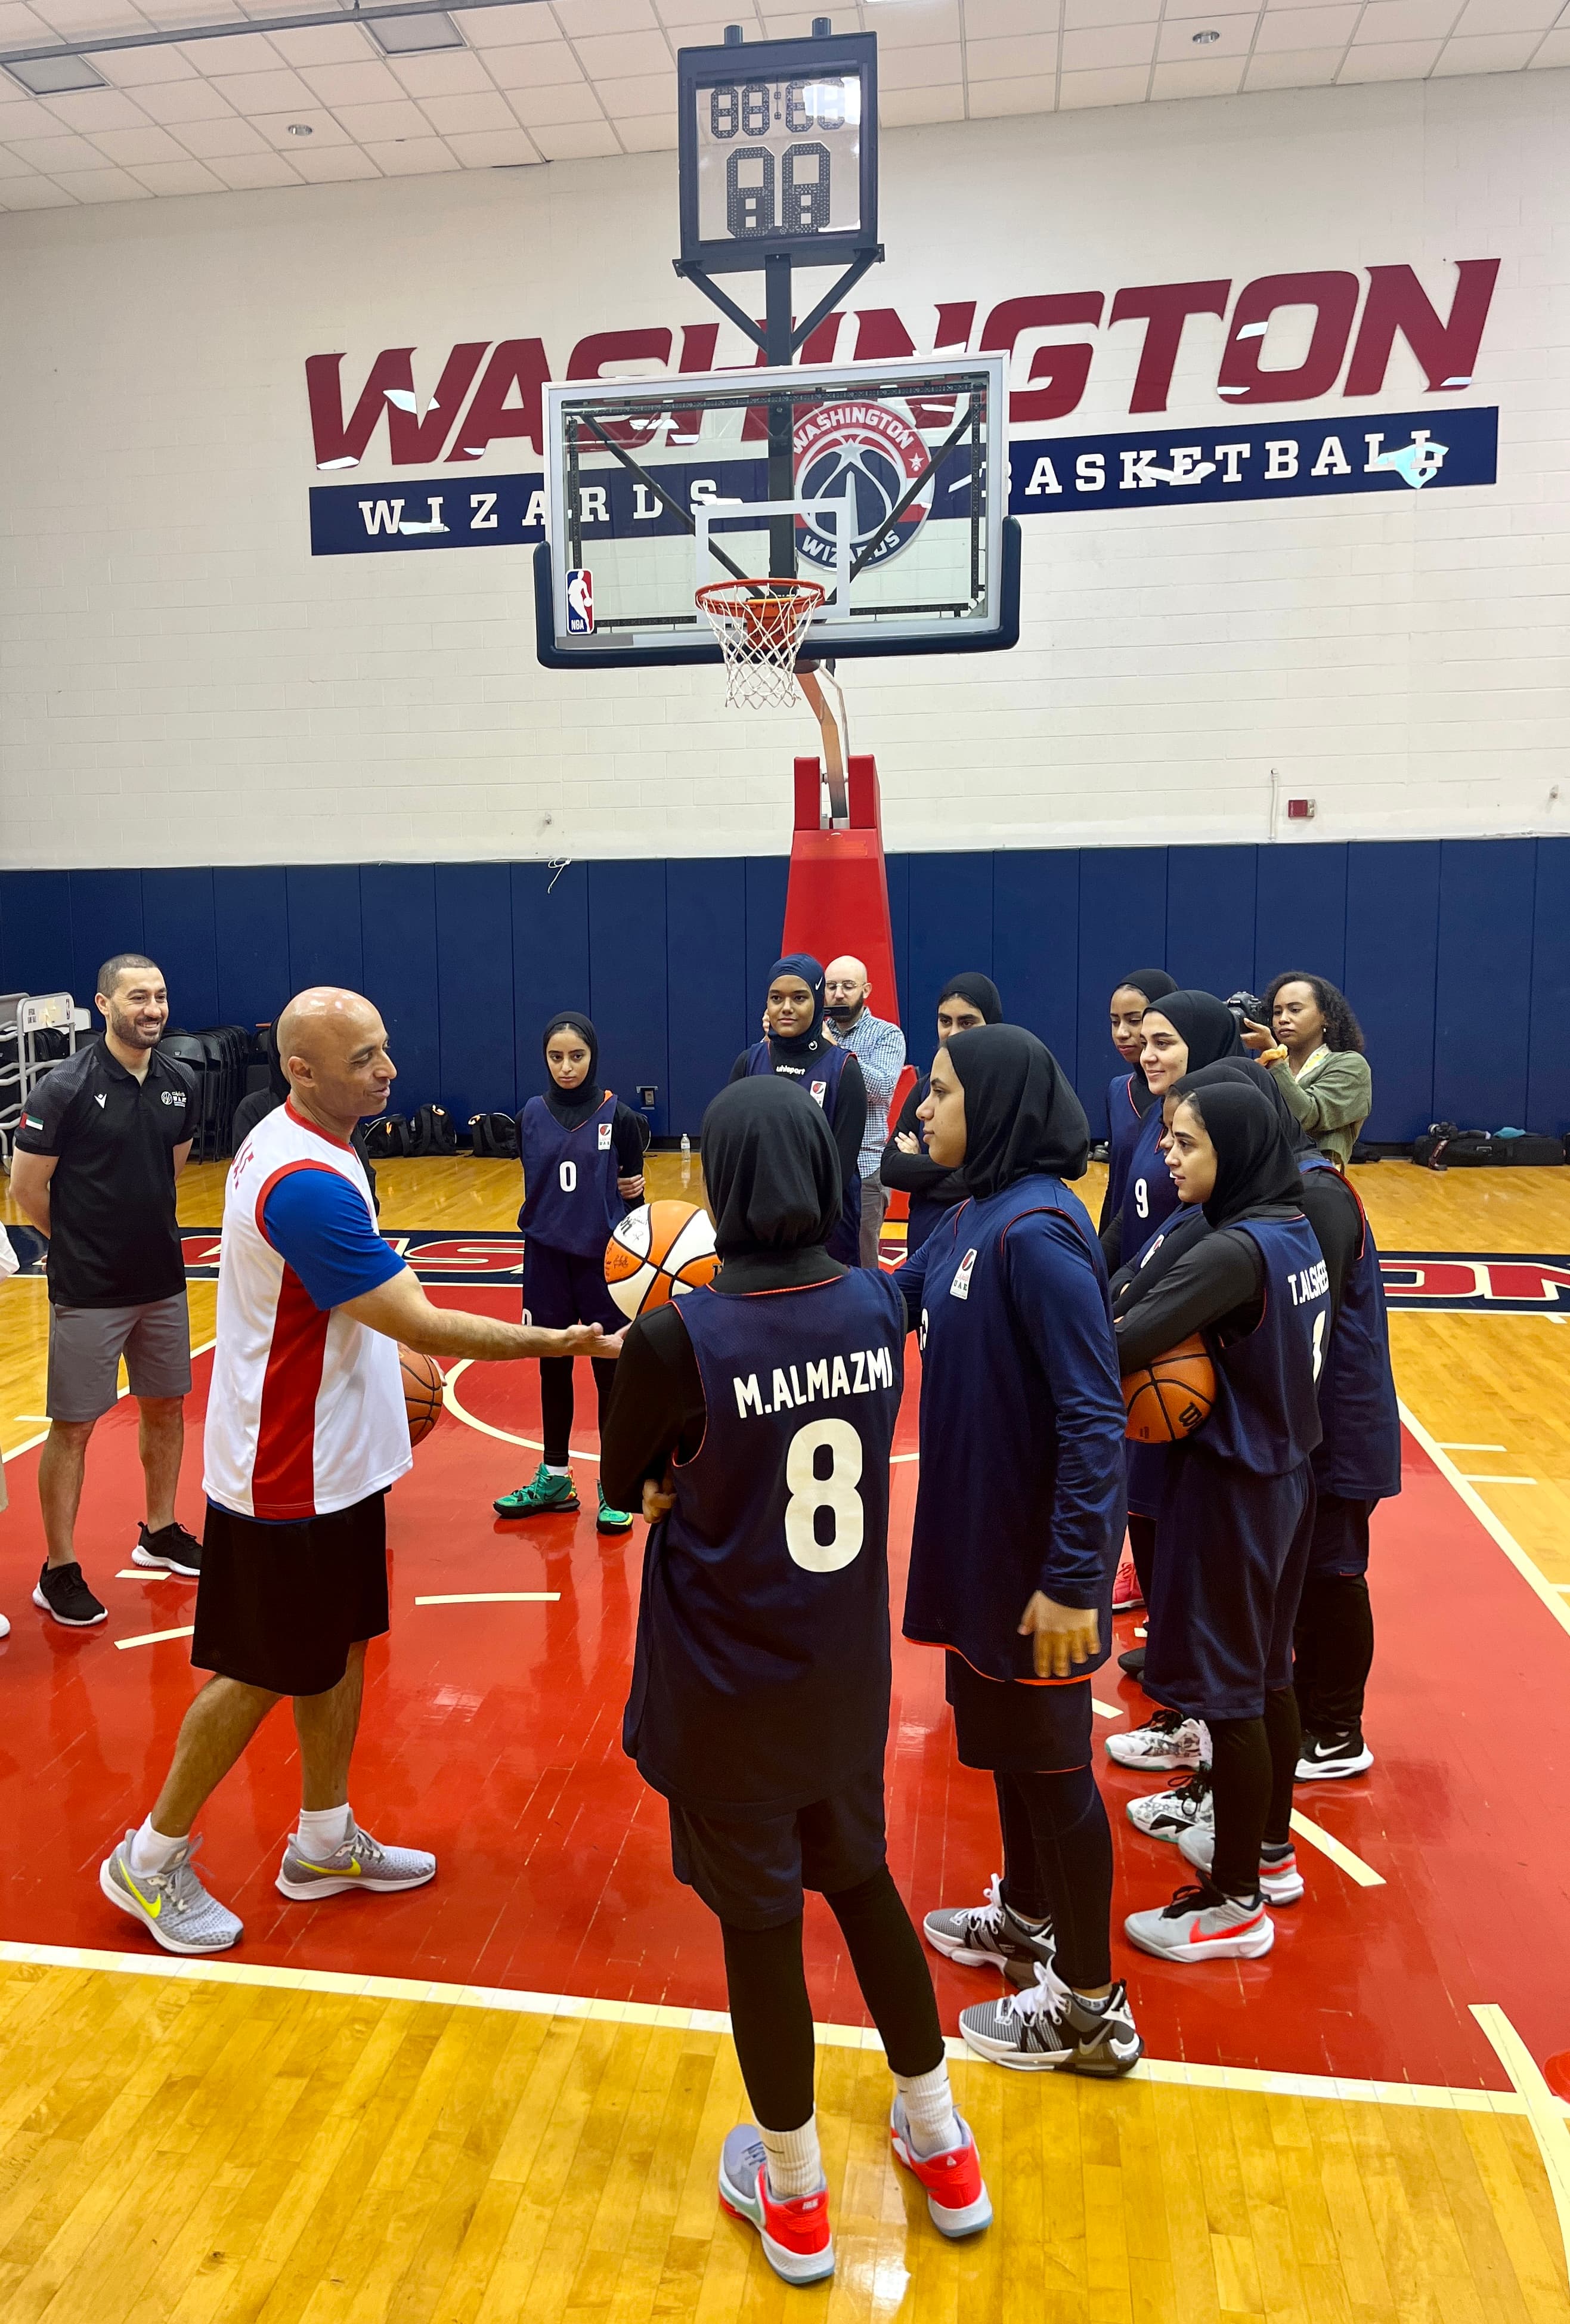 Coach training UAE women's basketball